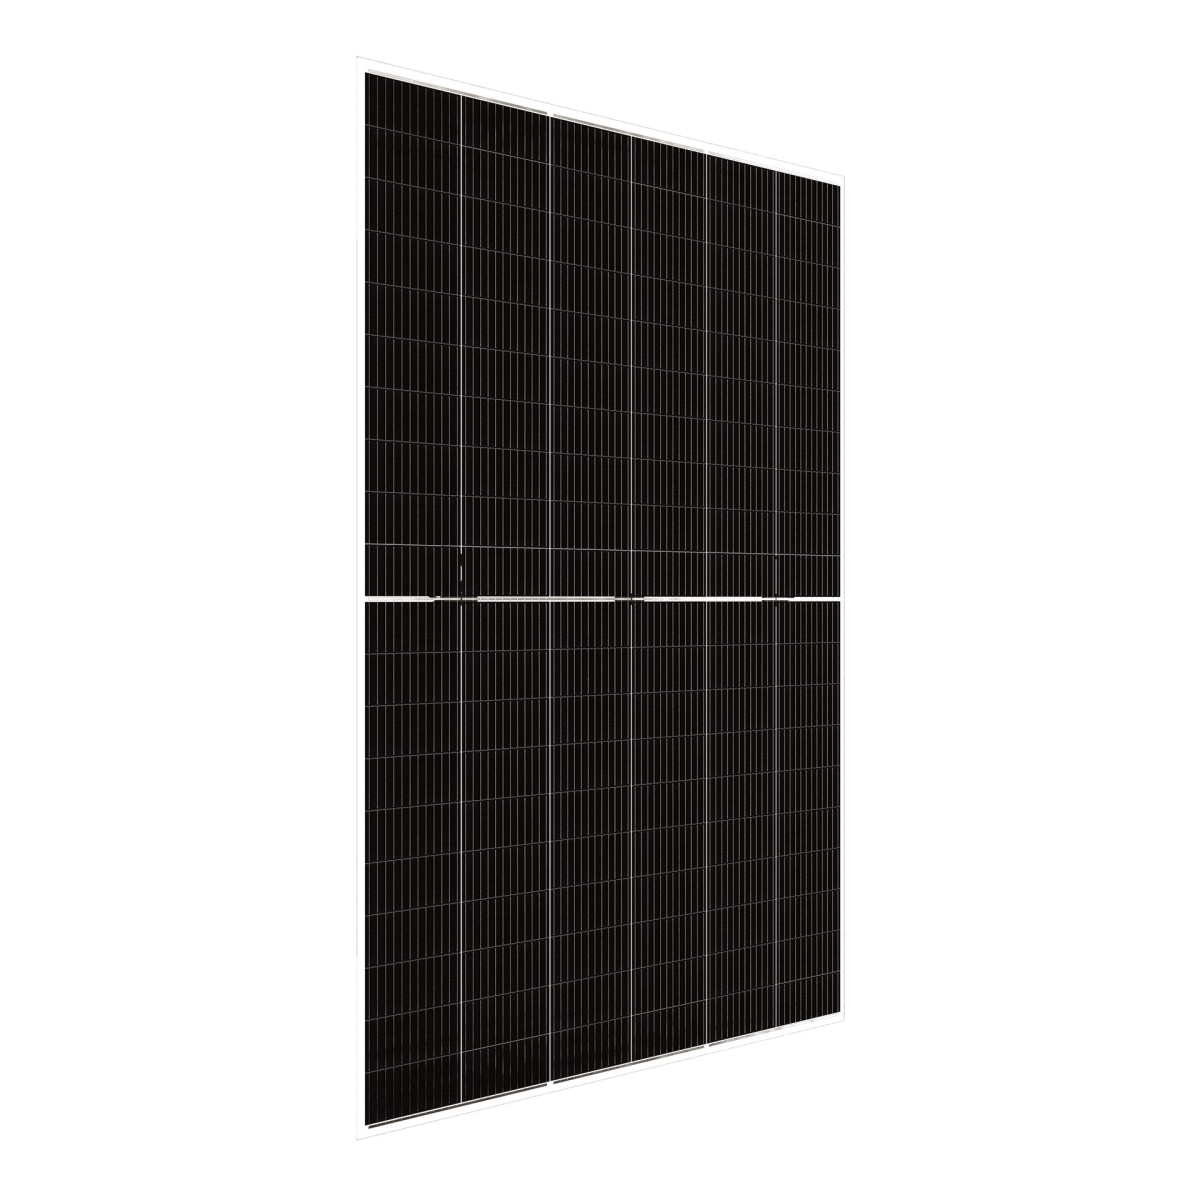 CW Enerji 605Wp M12 120PM Cells Bifacial G2G Half-Cut MB Solar Panel